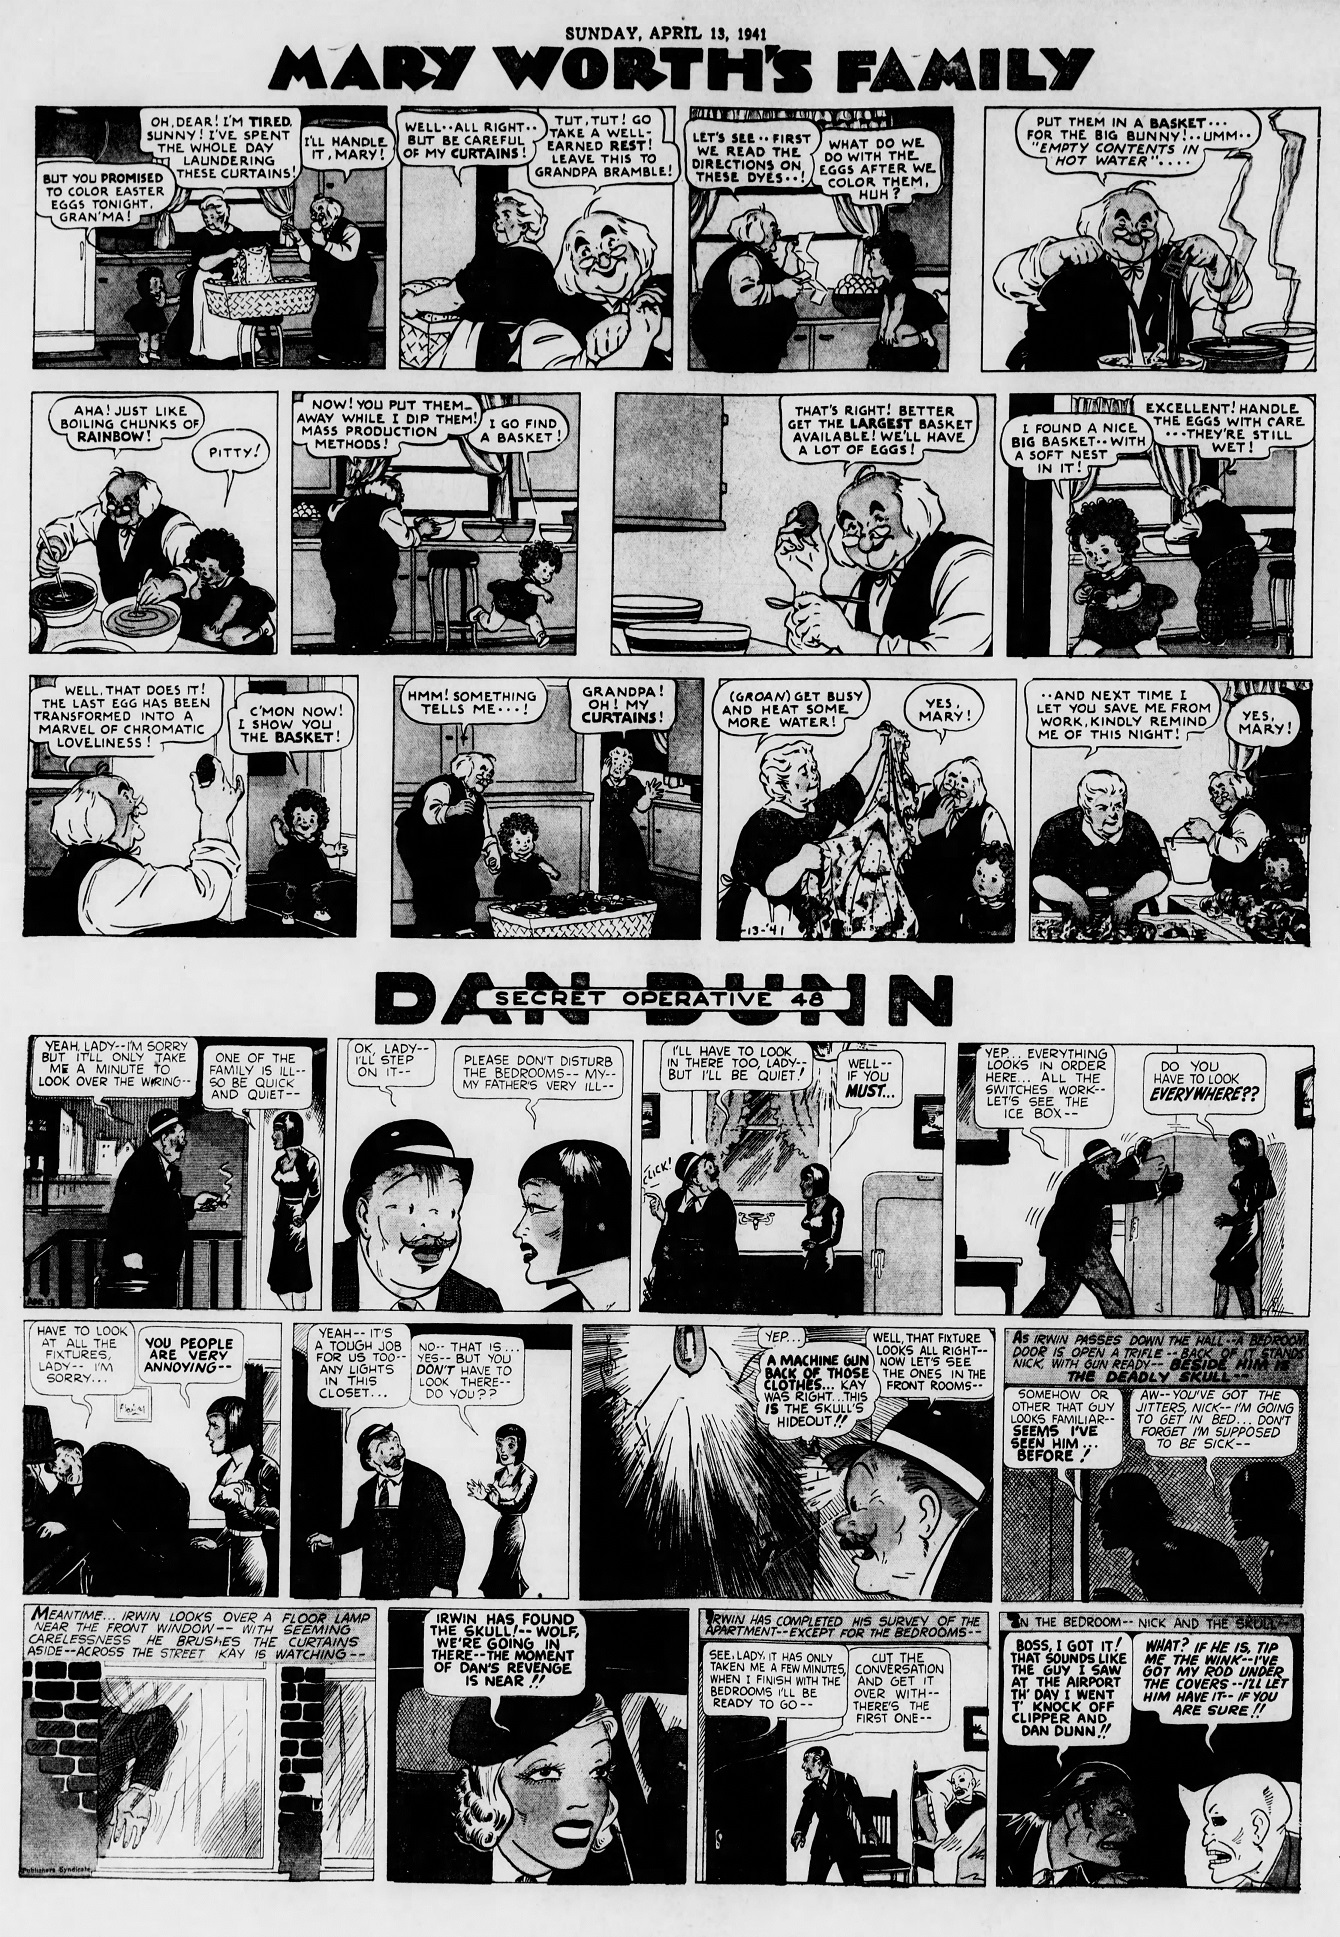 The_Brooklyn_Daily_Eagle_Sun__Apr_13__1941_(7).jpg